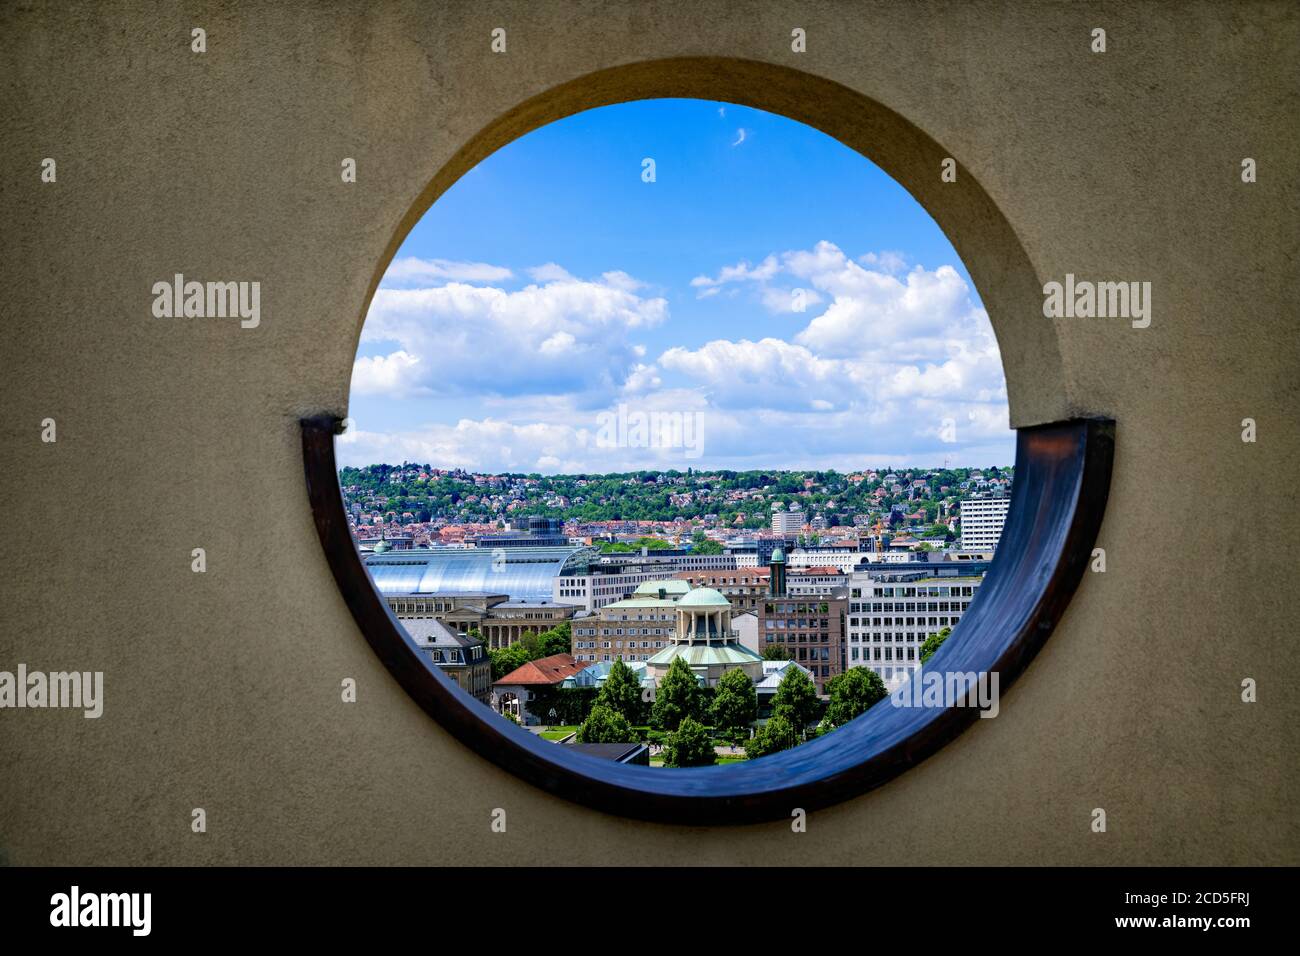 View of city through round window Stock Photo